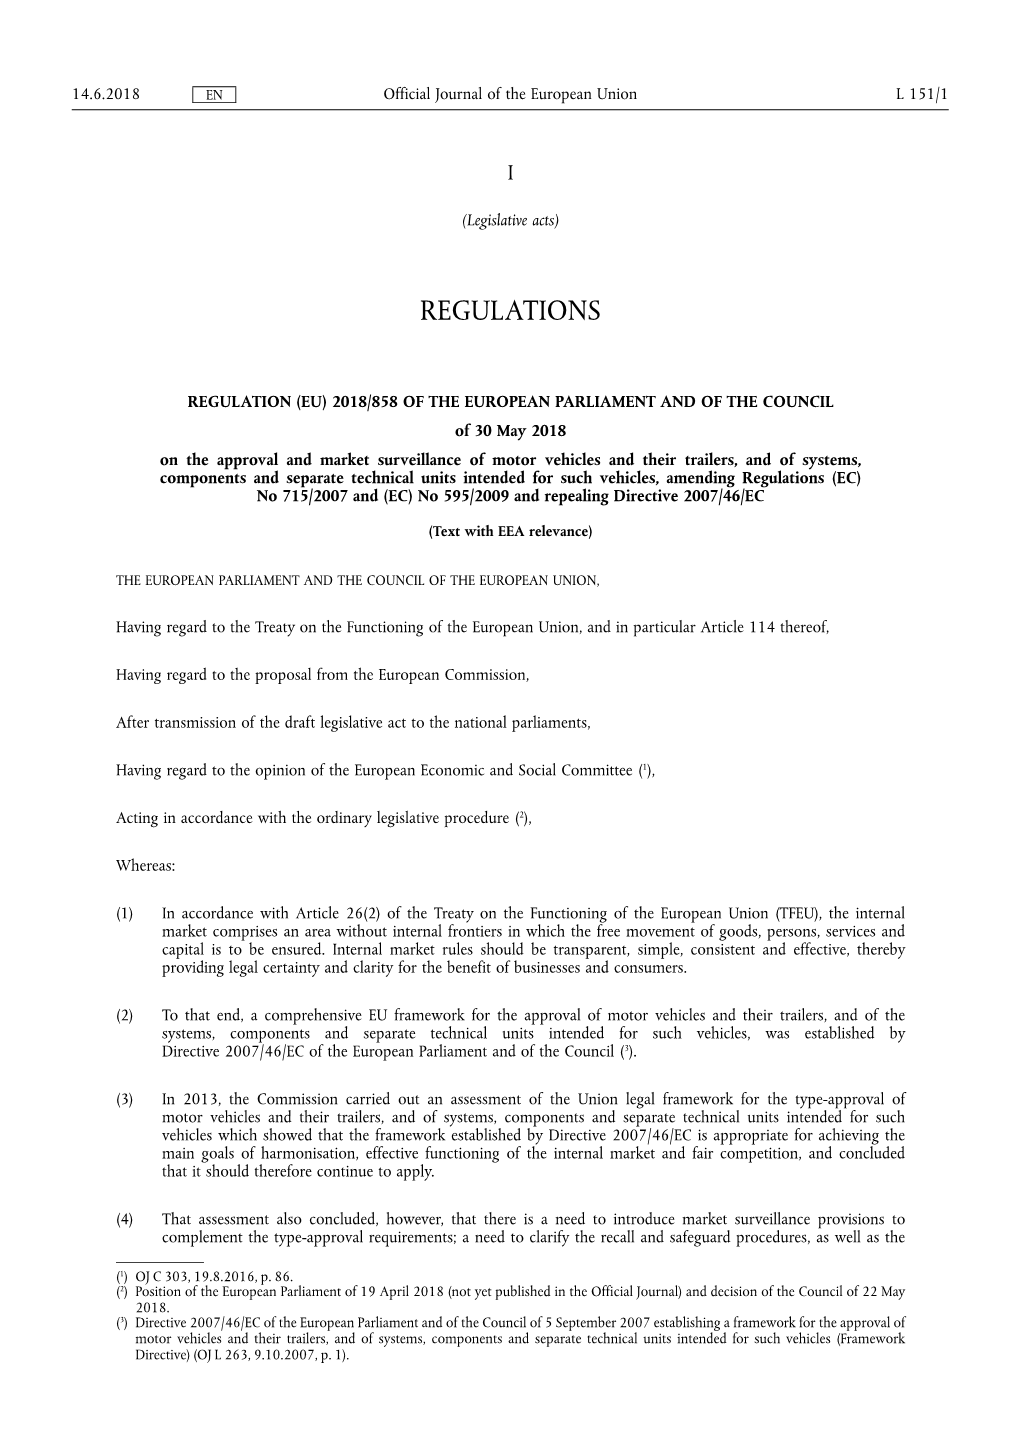 Regulation (EU) 2018/858